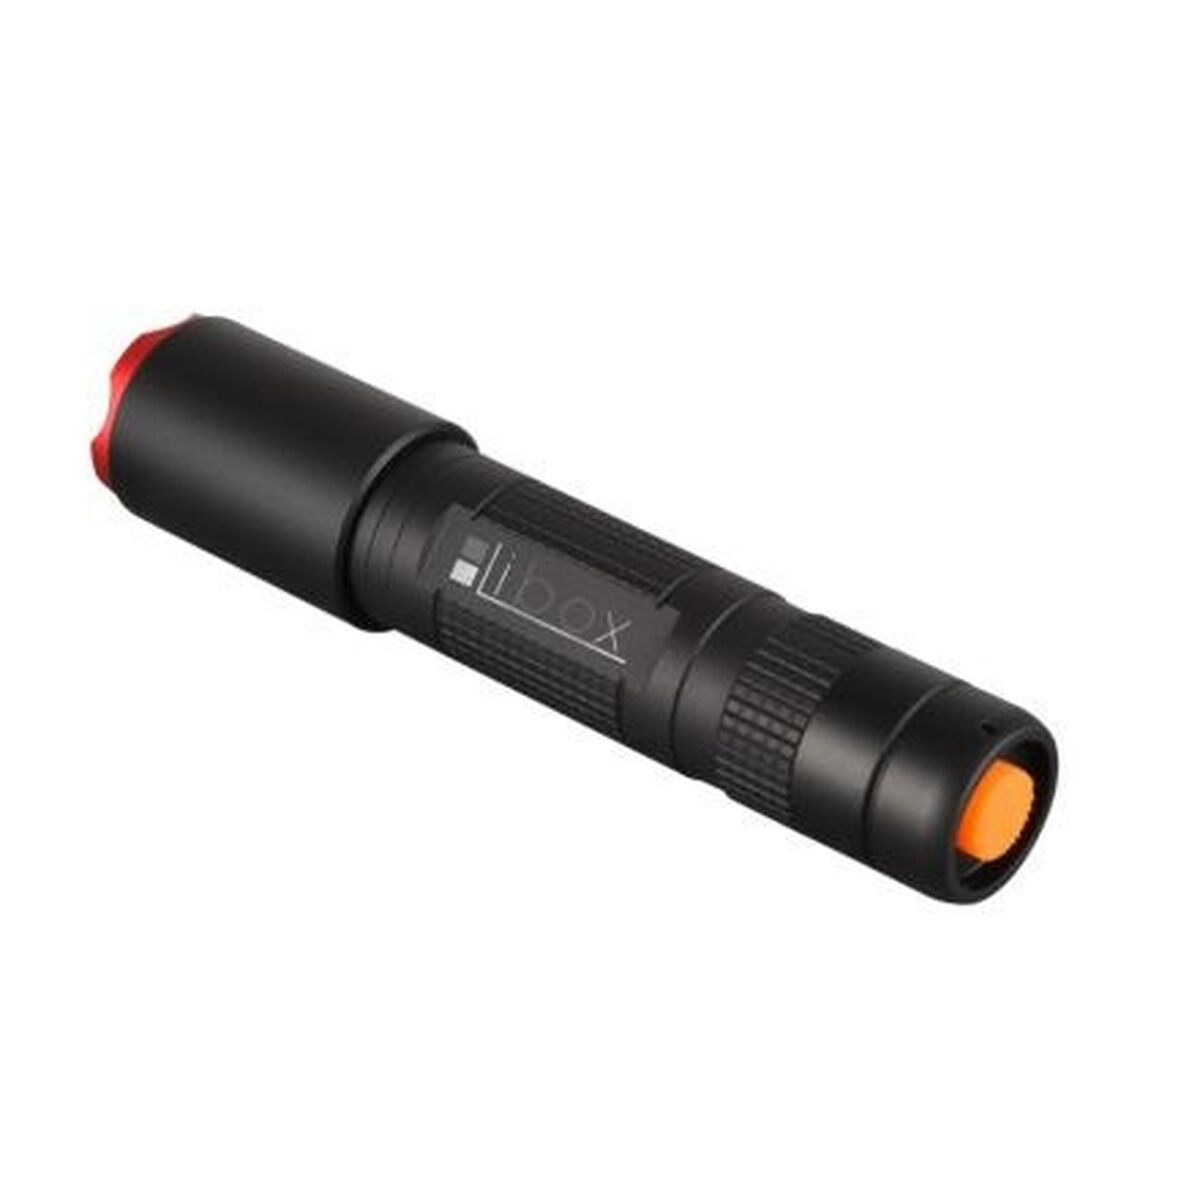 Lanterna LED Libox akumulatorowa Ultra Compact LB0108